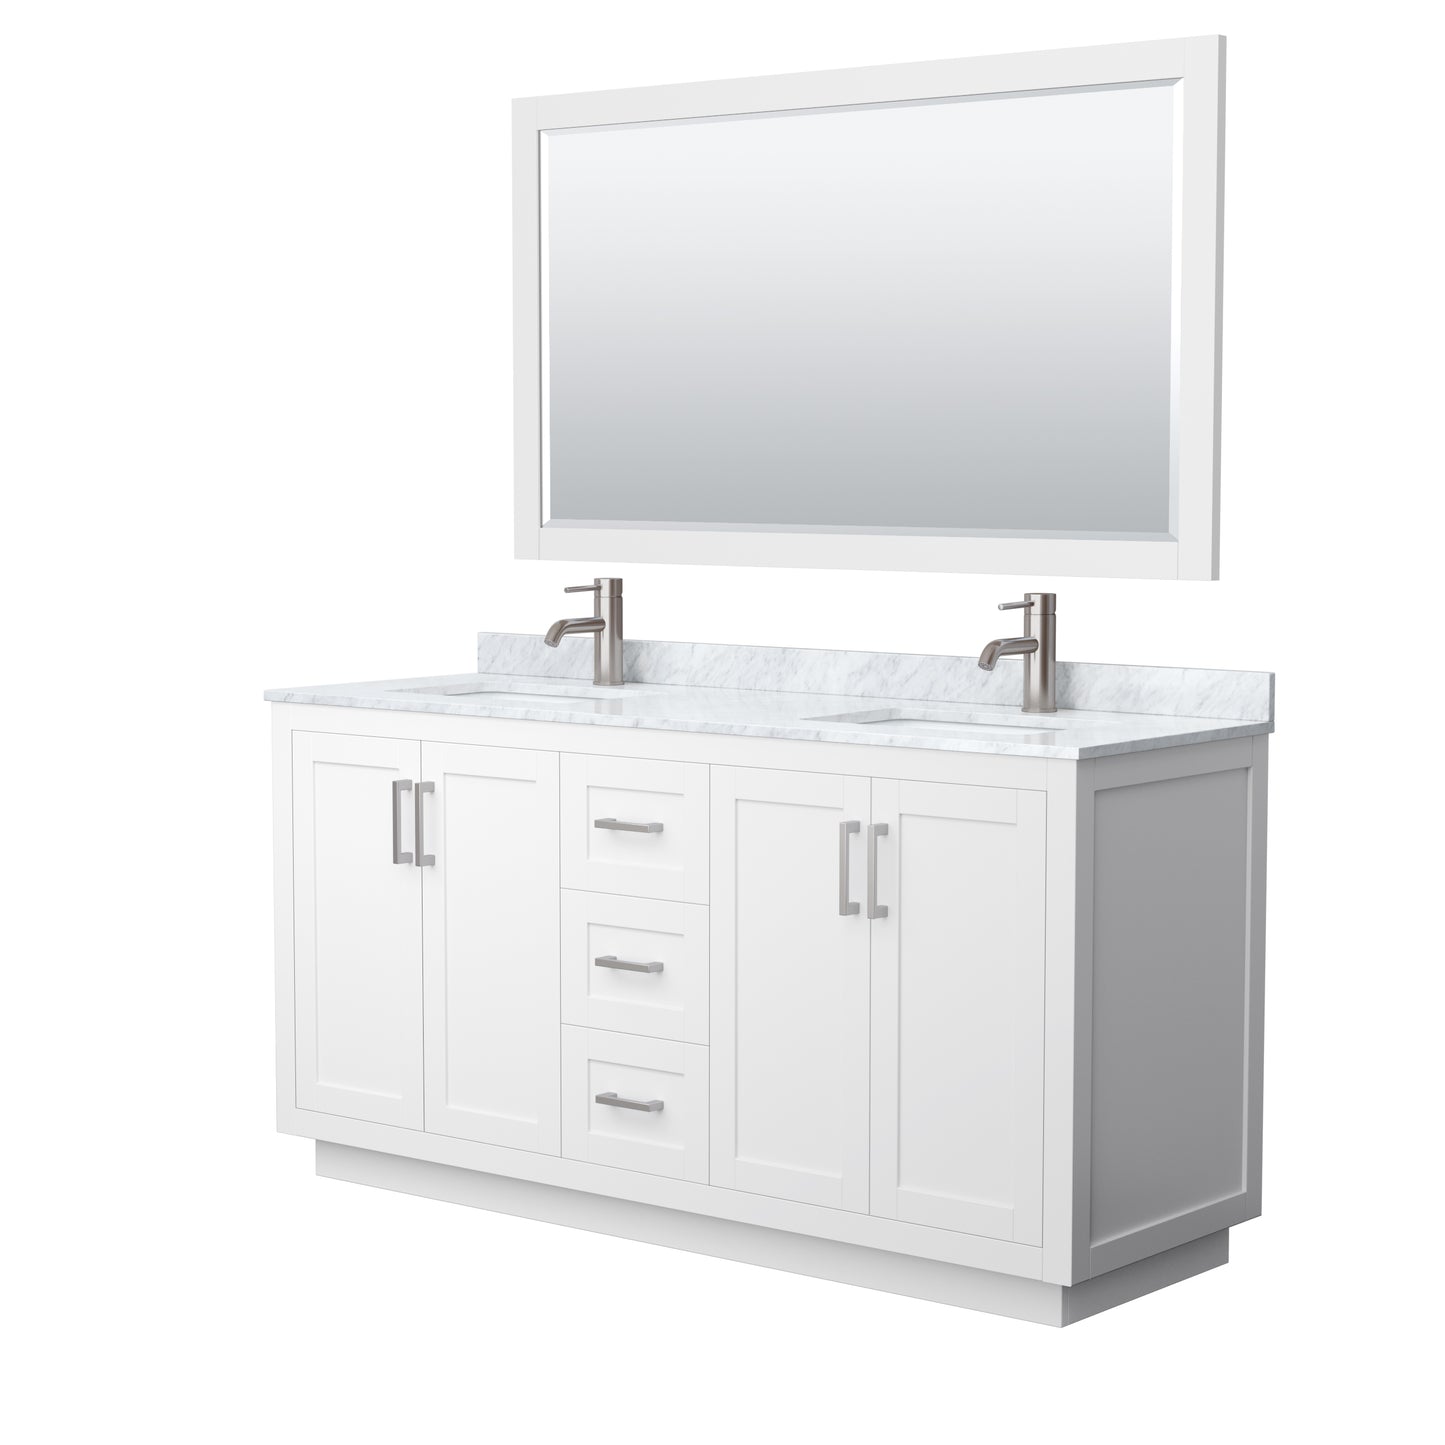 Wyndham Miranda 66 Inch Double Bathroom Vanity in White Carrara Marble Countertop with Undermount Square Sinks and Trim - Luxe Bathroom Vanities